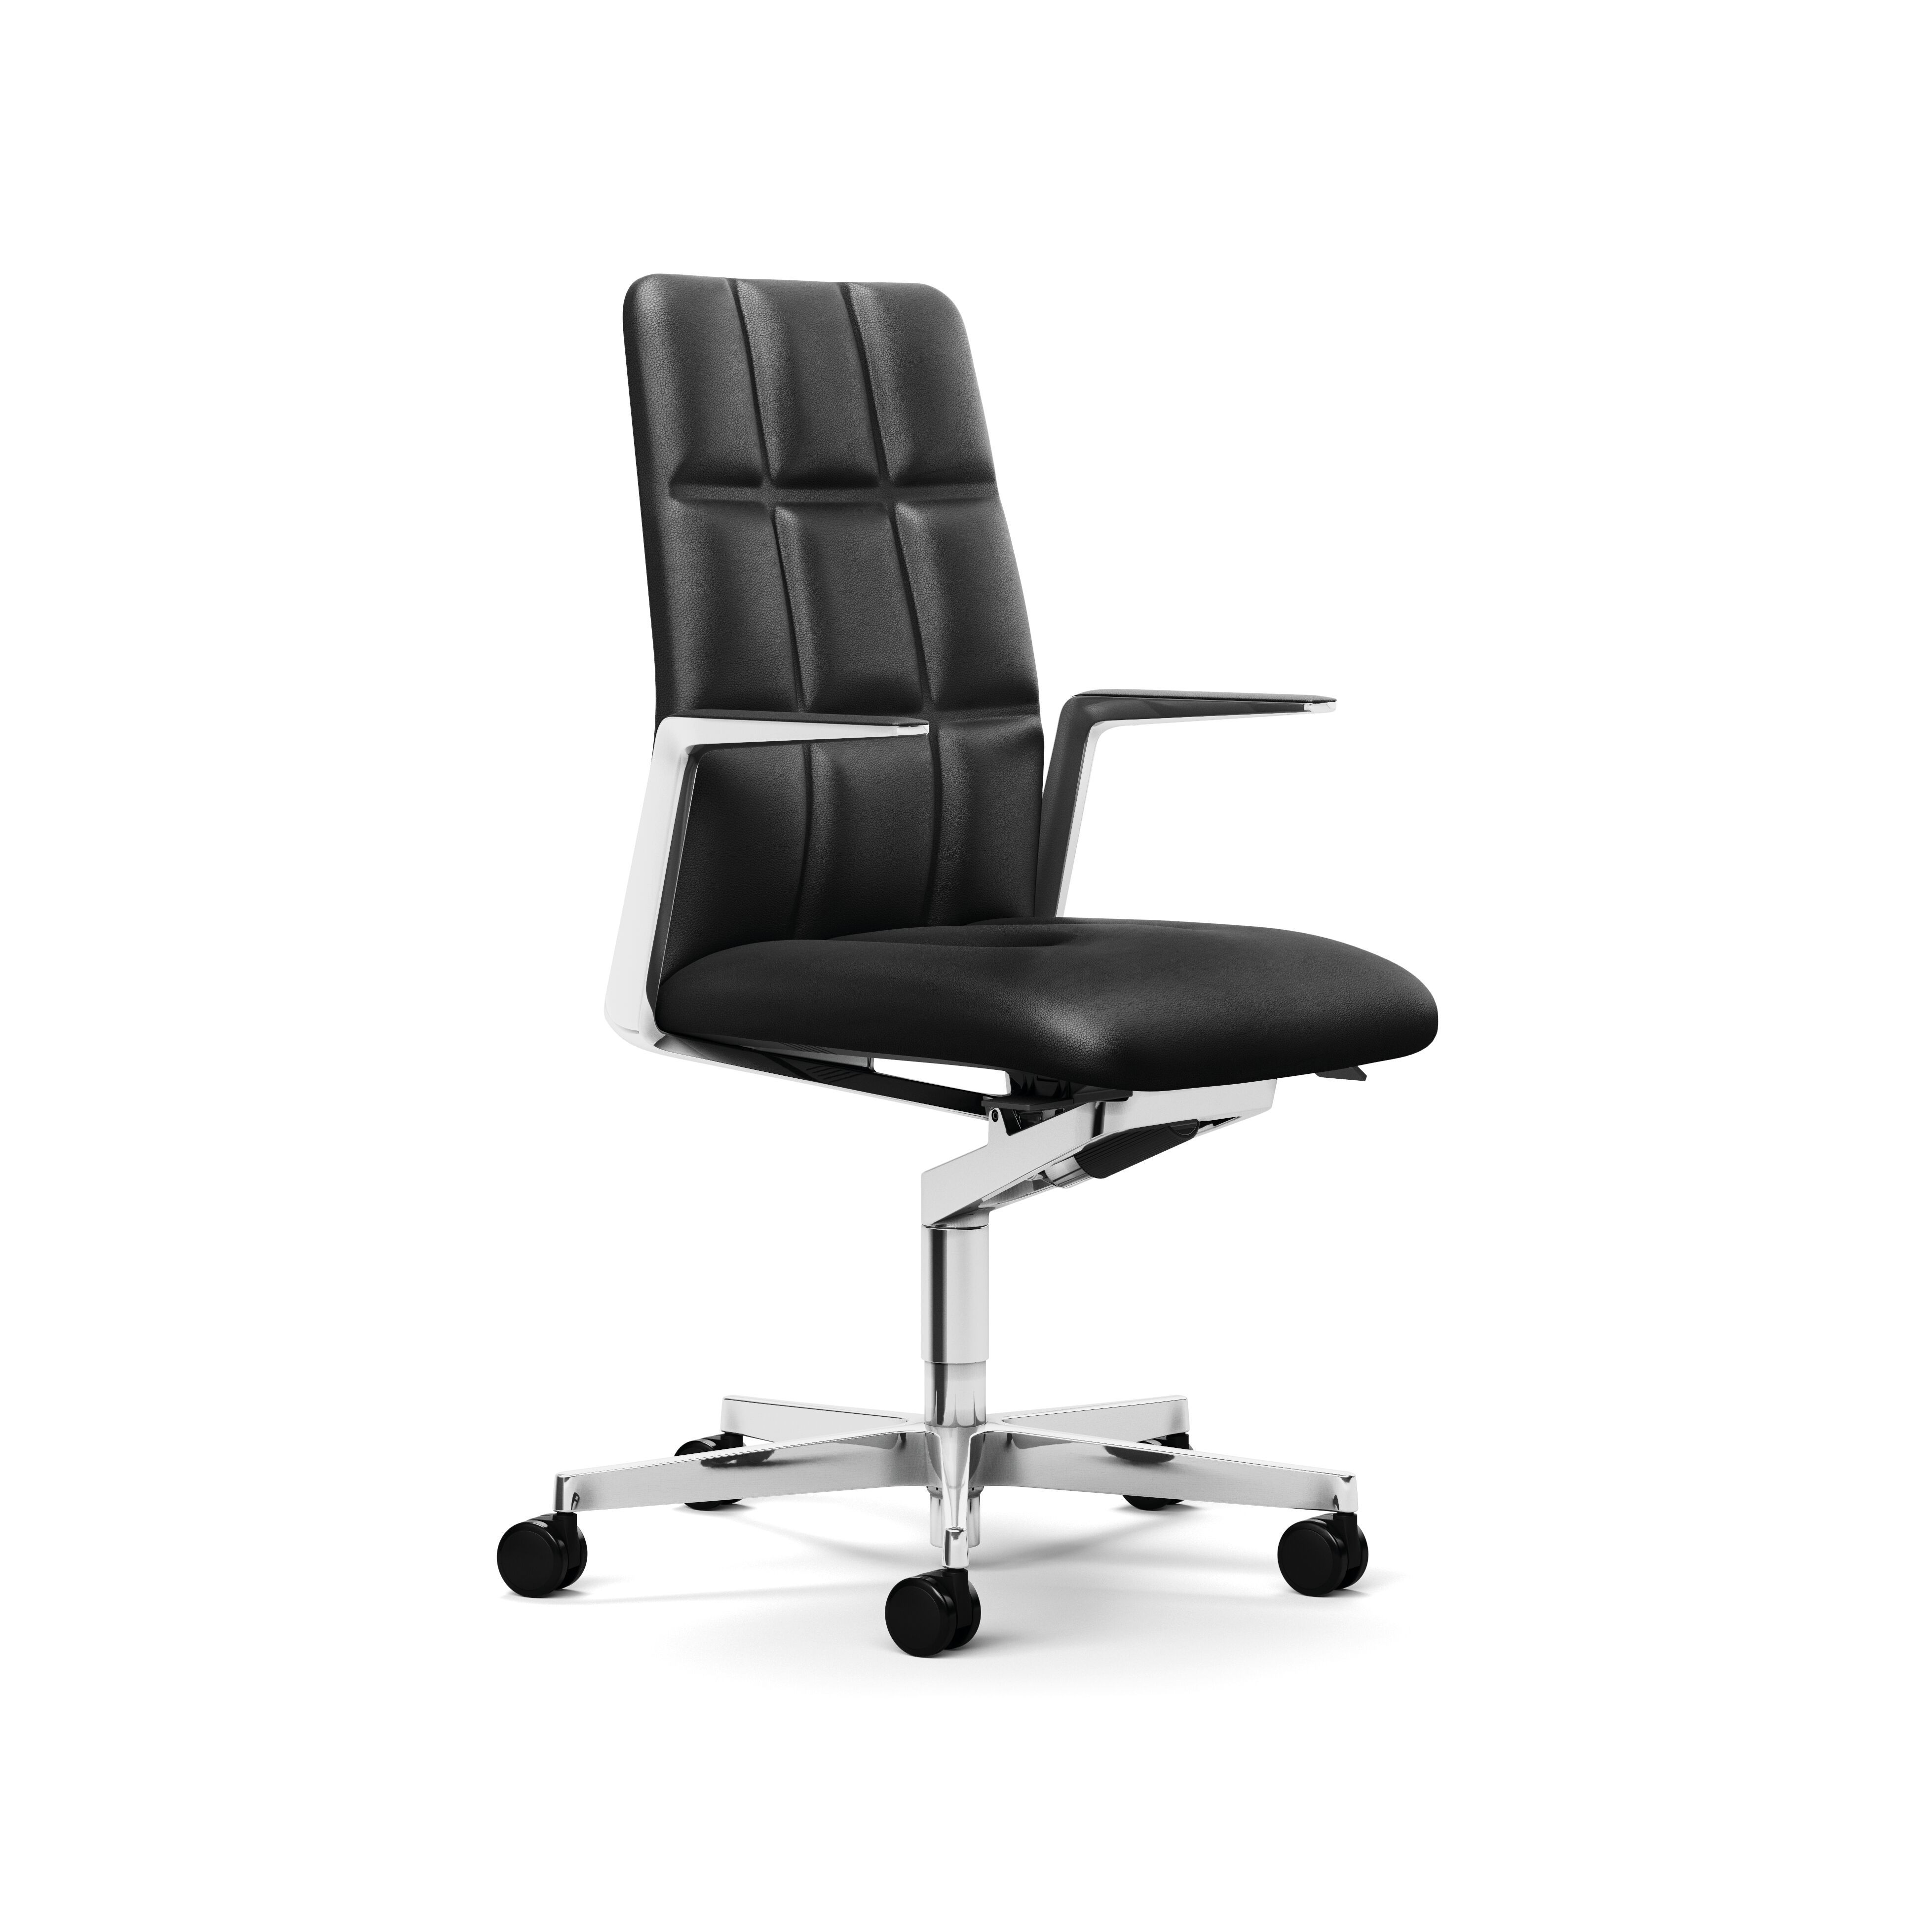 04-WK-Leadchair-Management-2060-Leather-Black-konfigurator-0037.tif